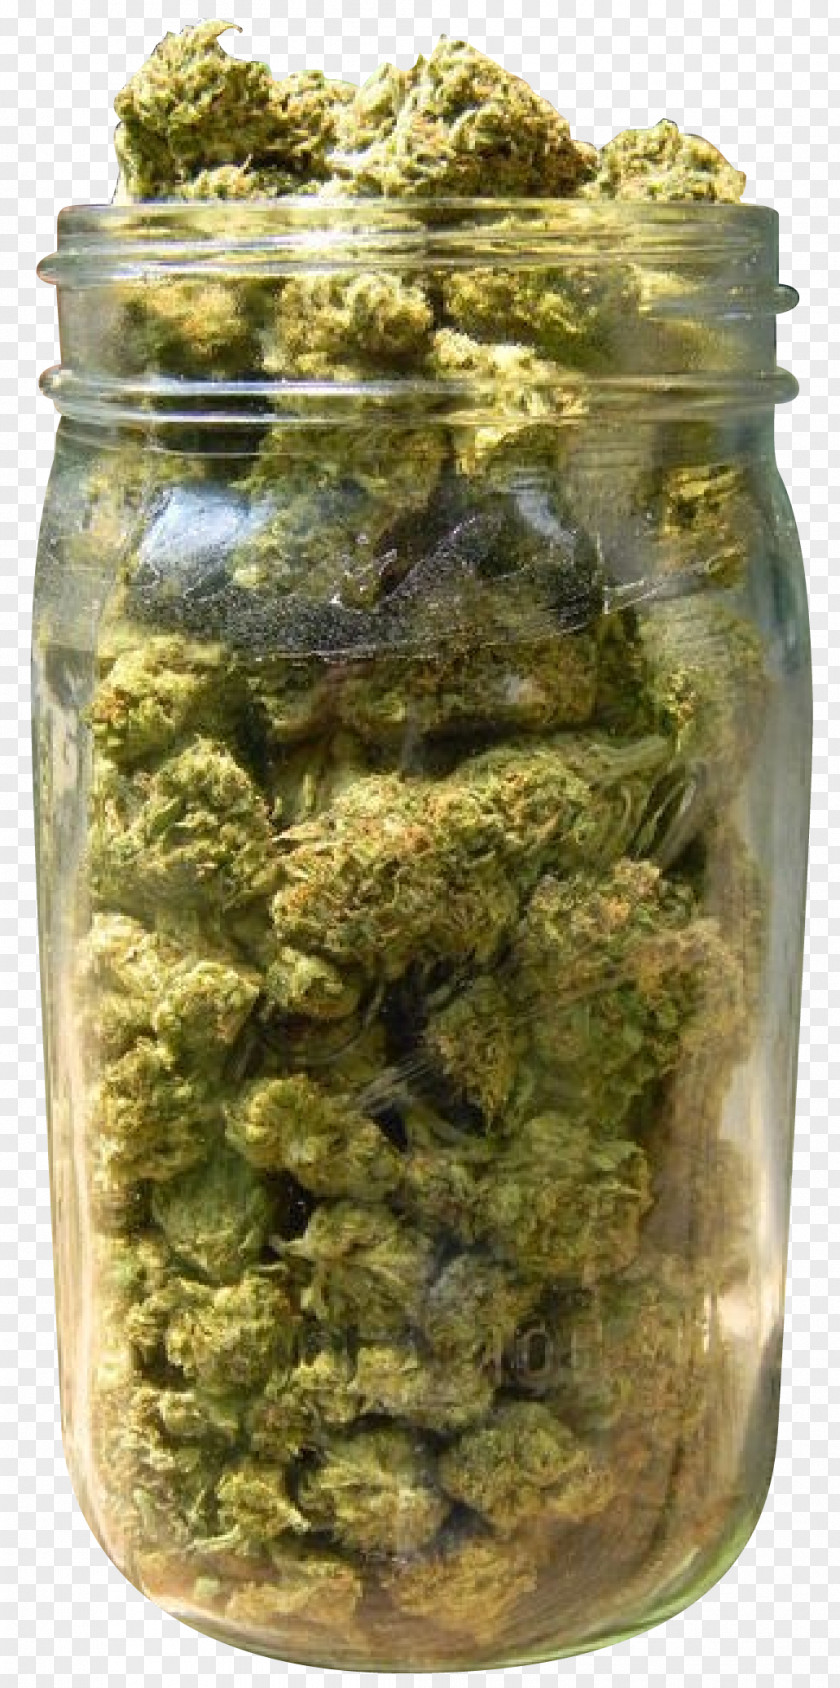 Weed Cannabis Sativa Medical Industry Smoking PNG